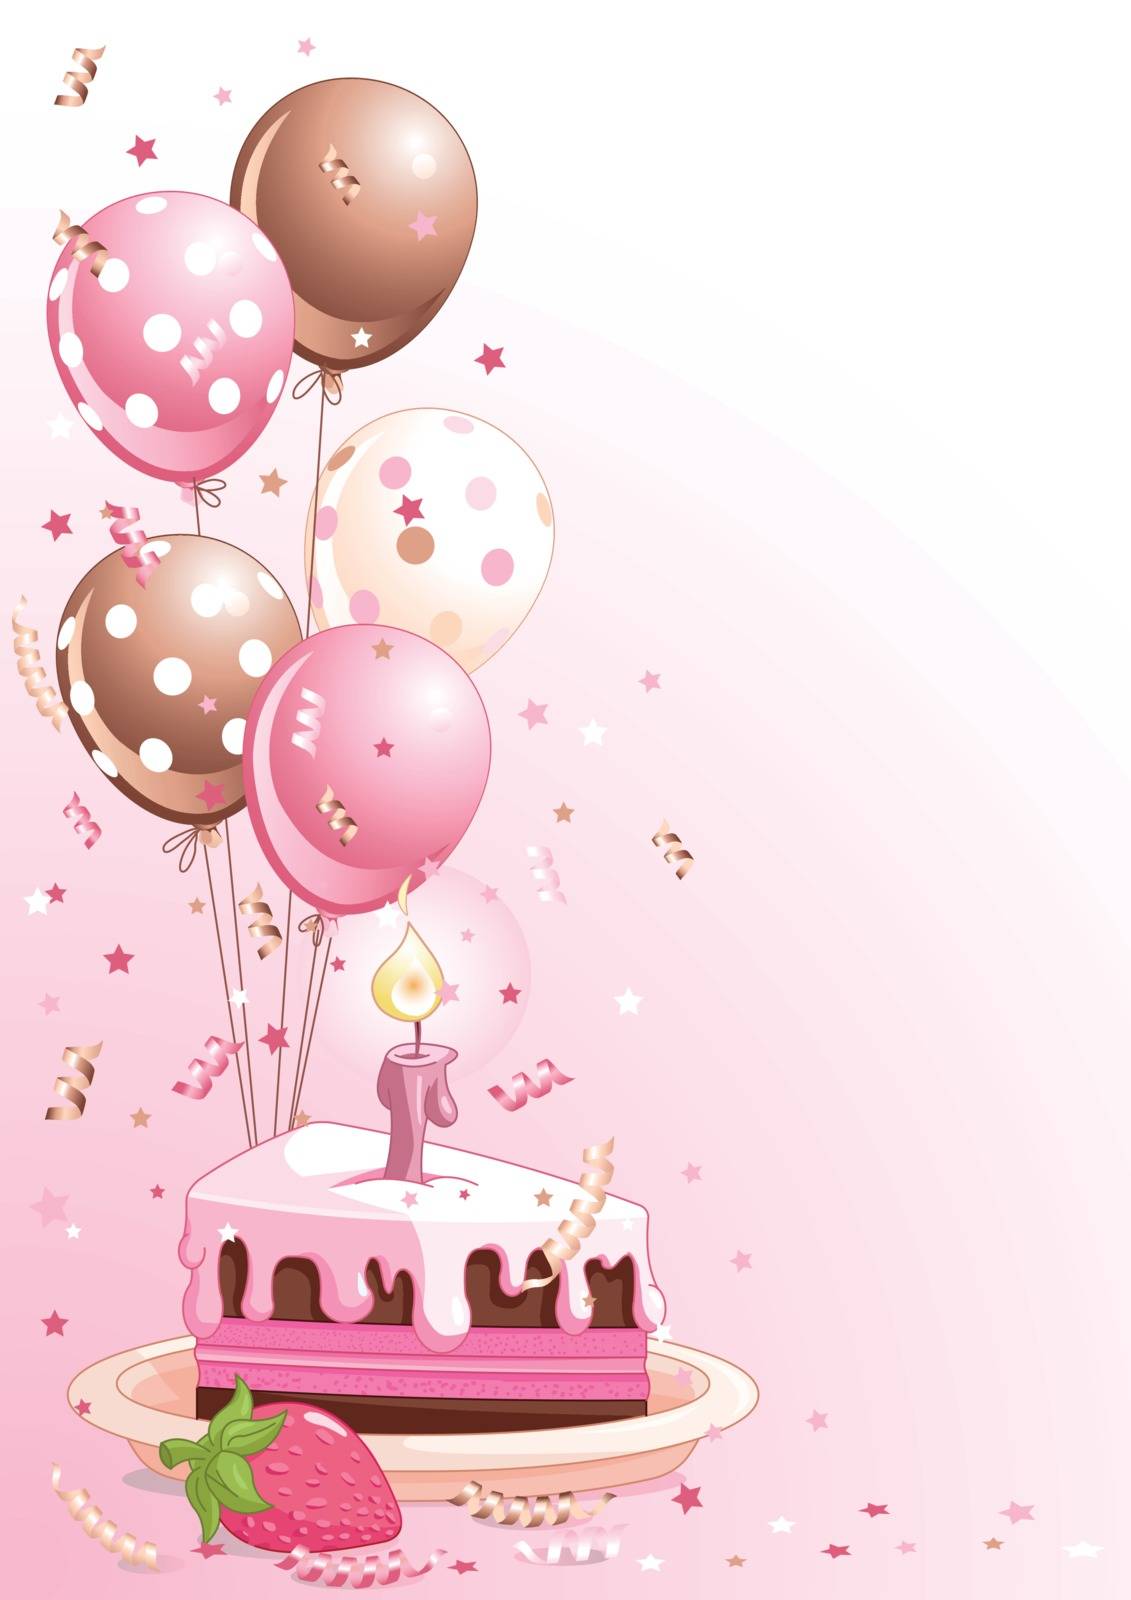 Slice of Birthday Cake with Balloons by Dazdraperma